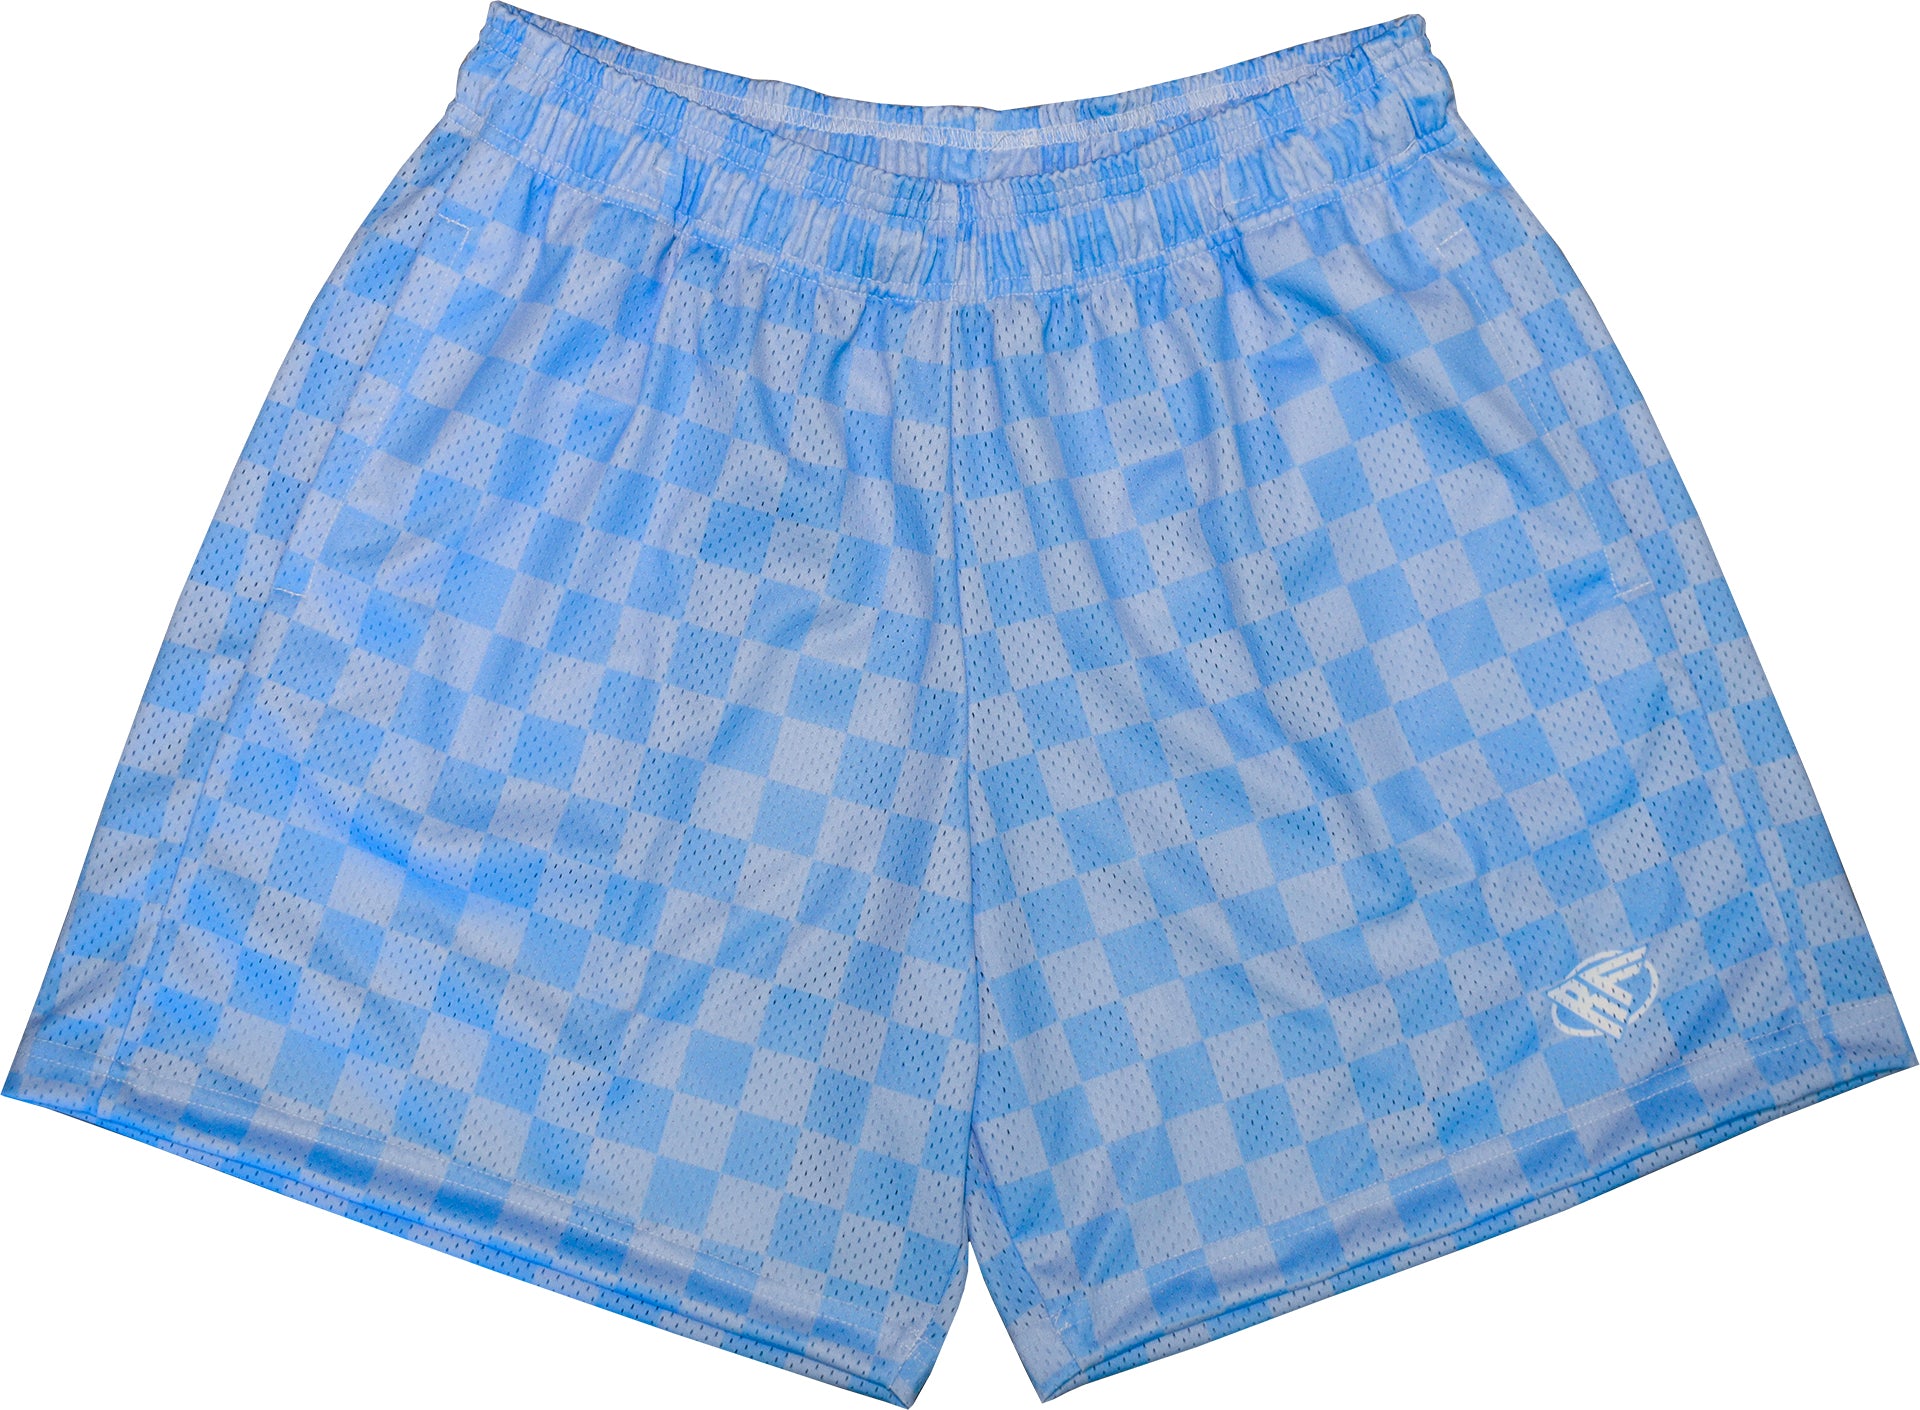 RF Mesh Summer Checkered Shorts - Powder Blue